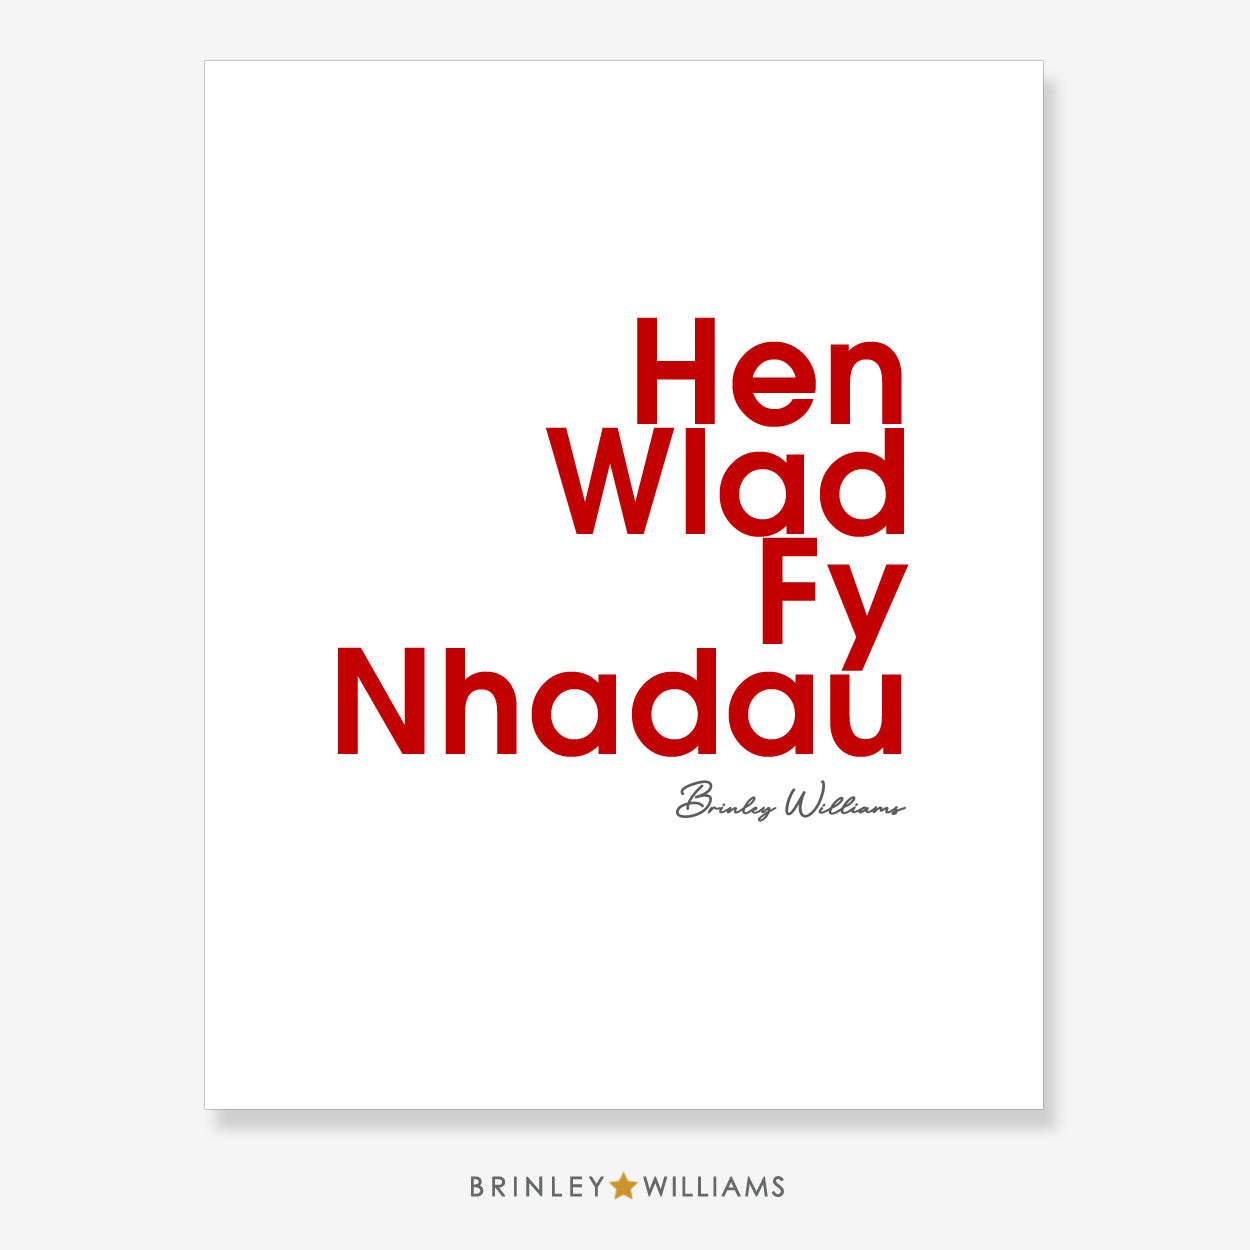 Hen Wlad Fy Nhadau Wall Art Poster - Red